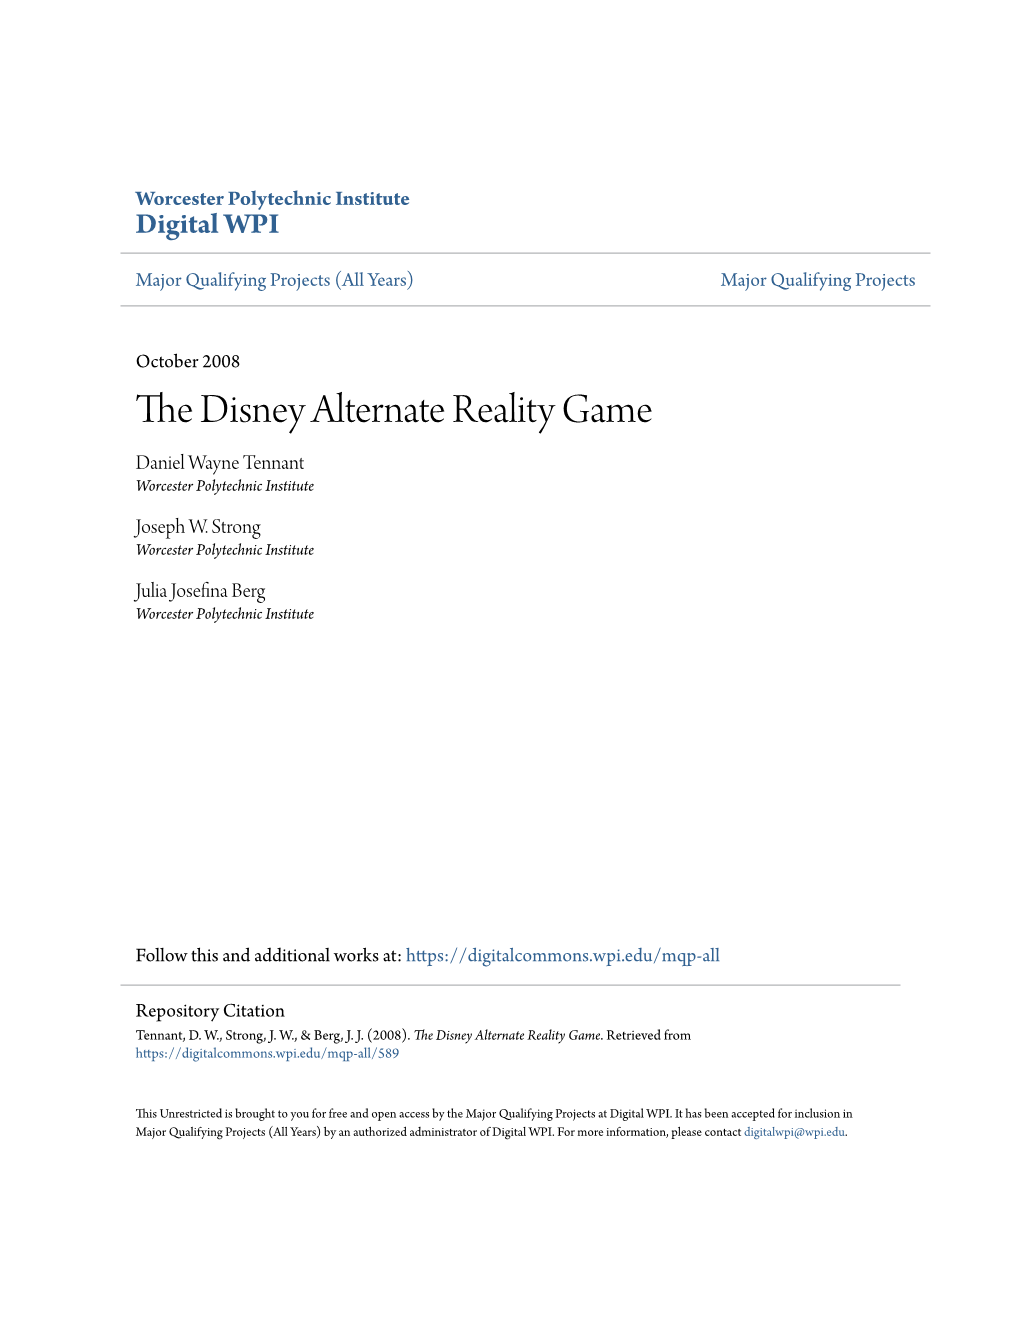 The Disney Alternate Reality Game Daniel Wayne Tennant Worcester Polytechnic Institute